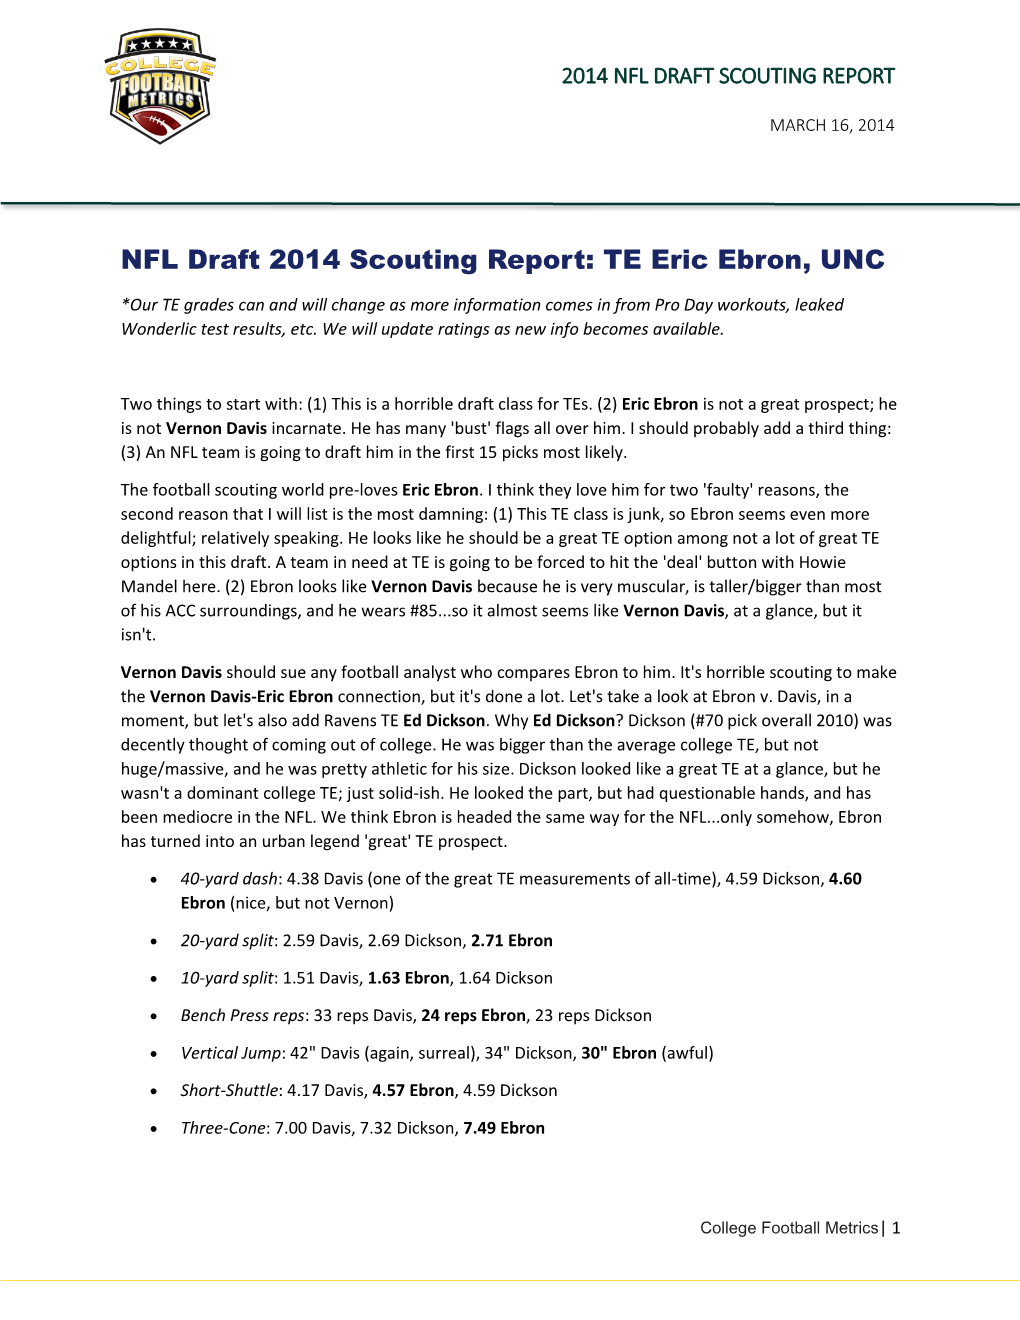 NFL Draft 2014 Scouting Report: TE Eric Ebron, UNC